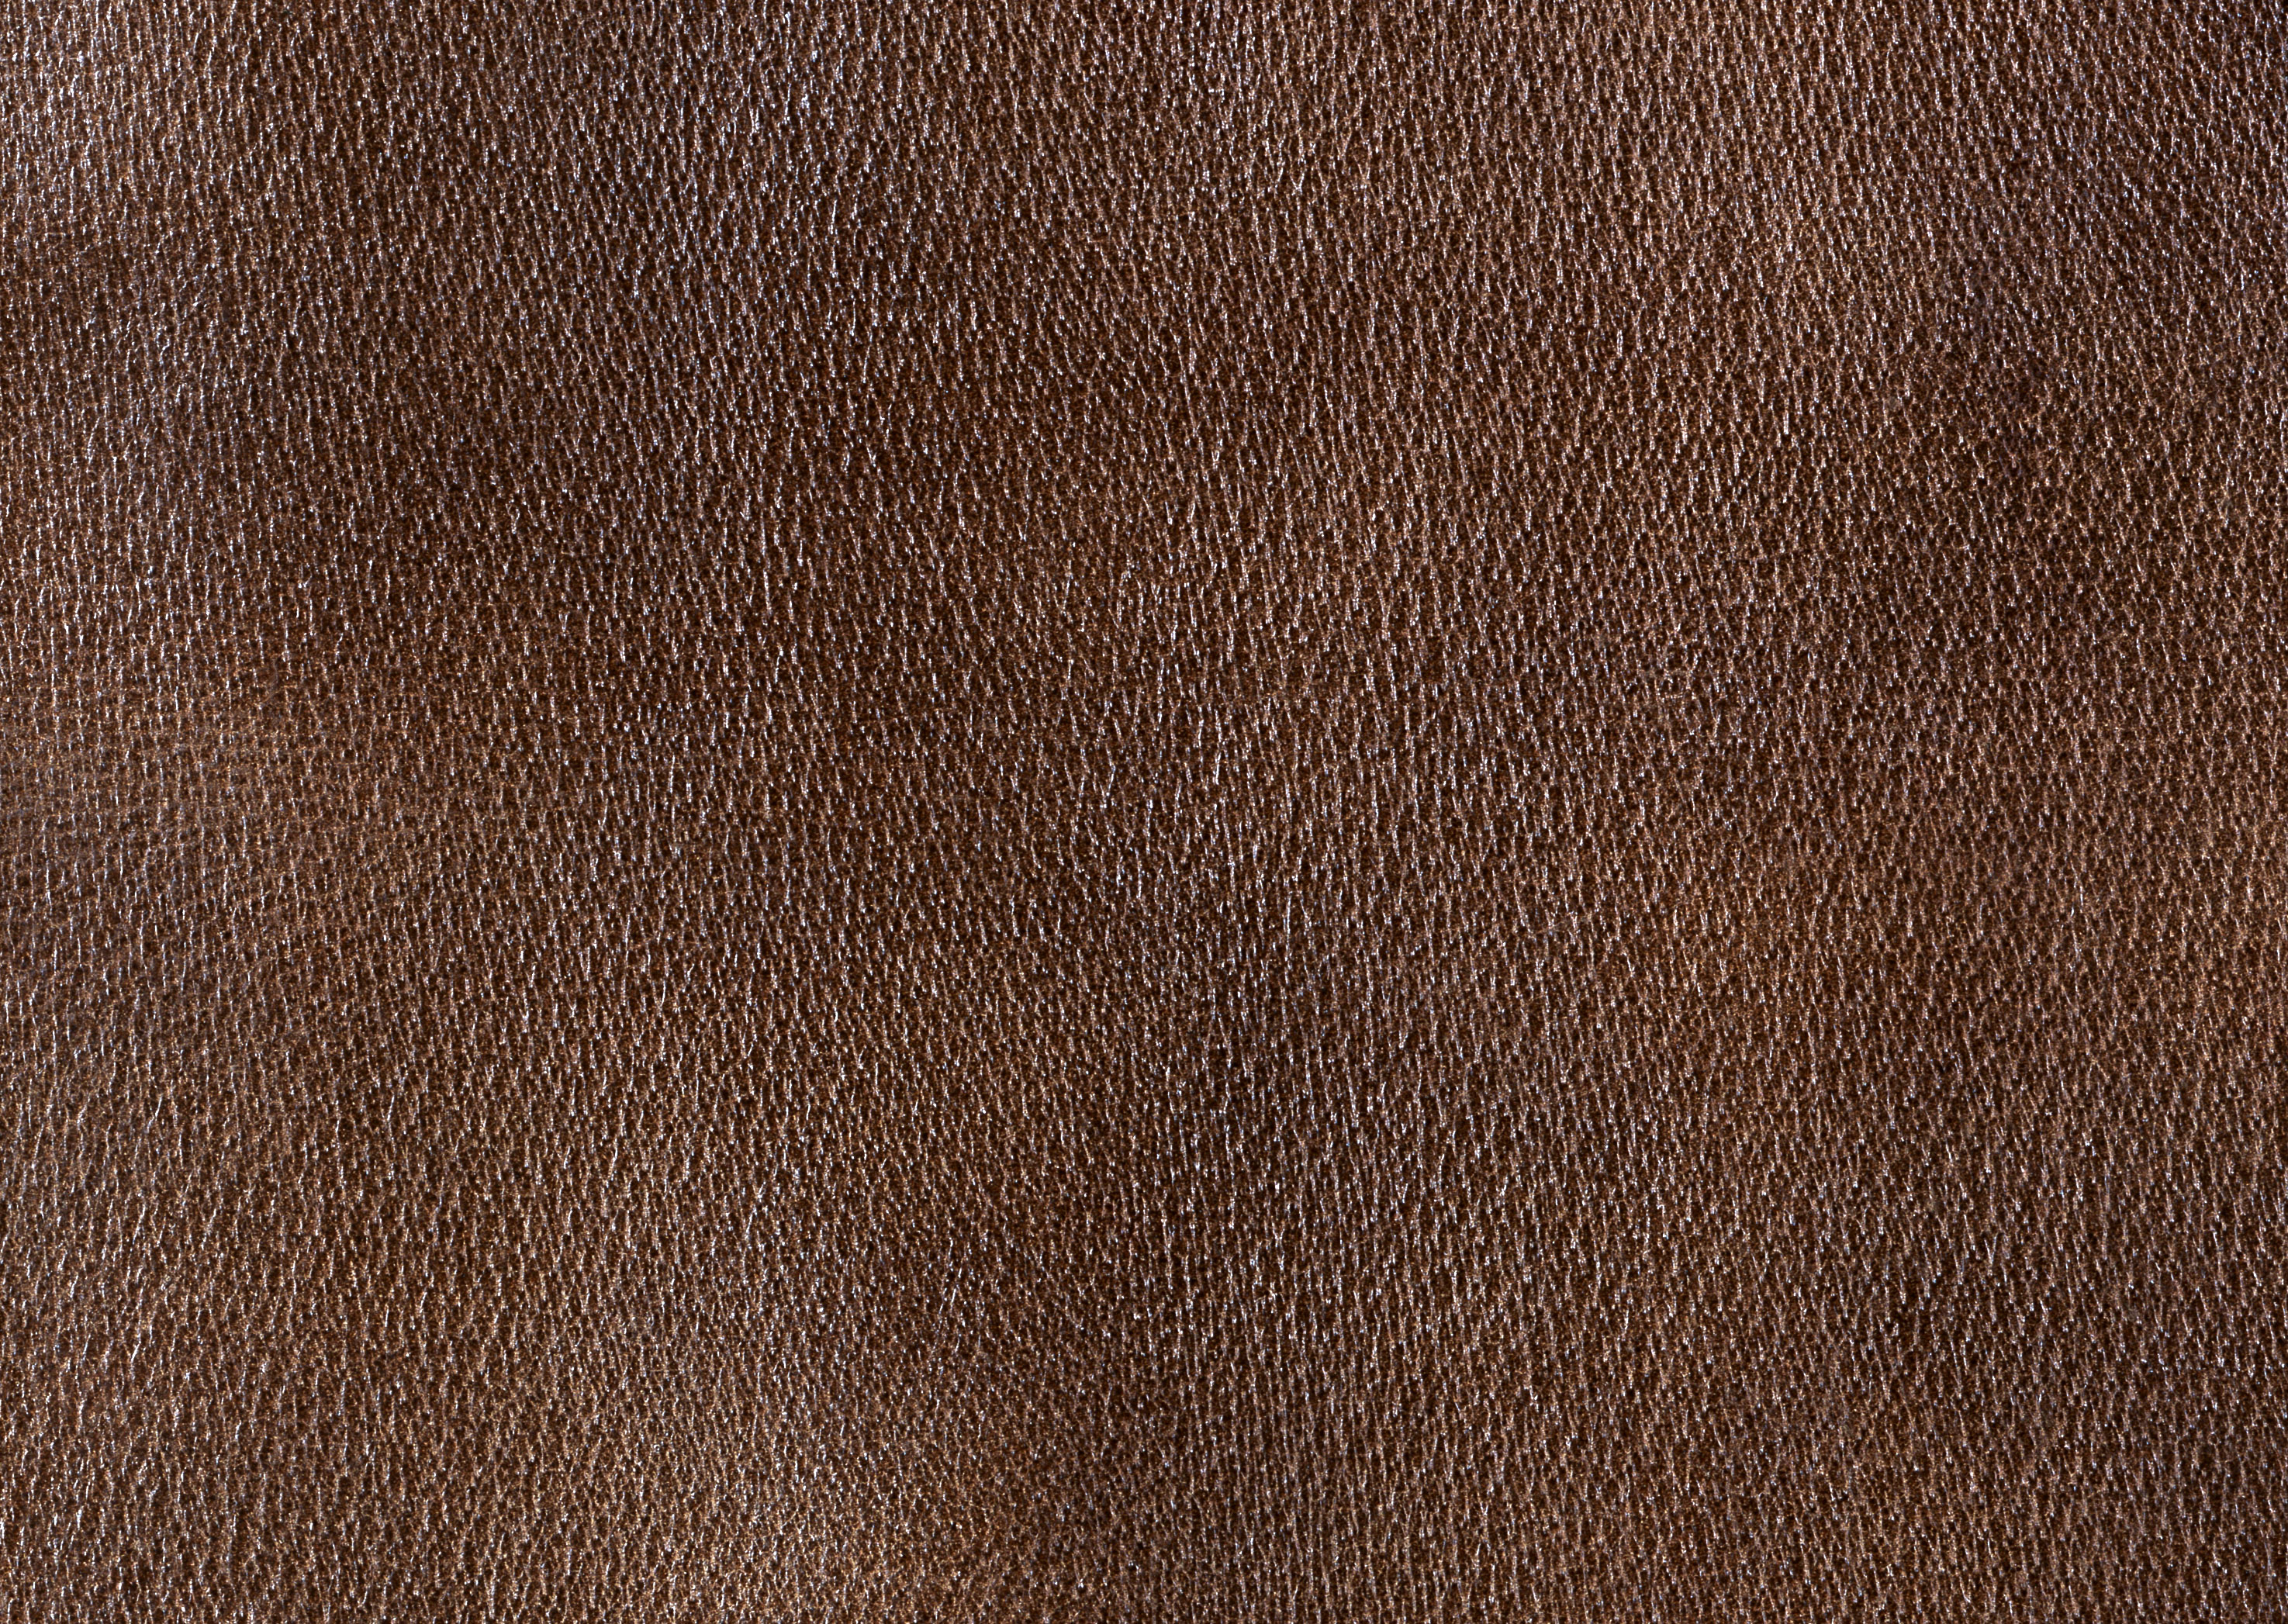 Brown Leather Big Textures